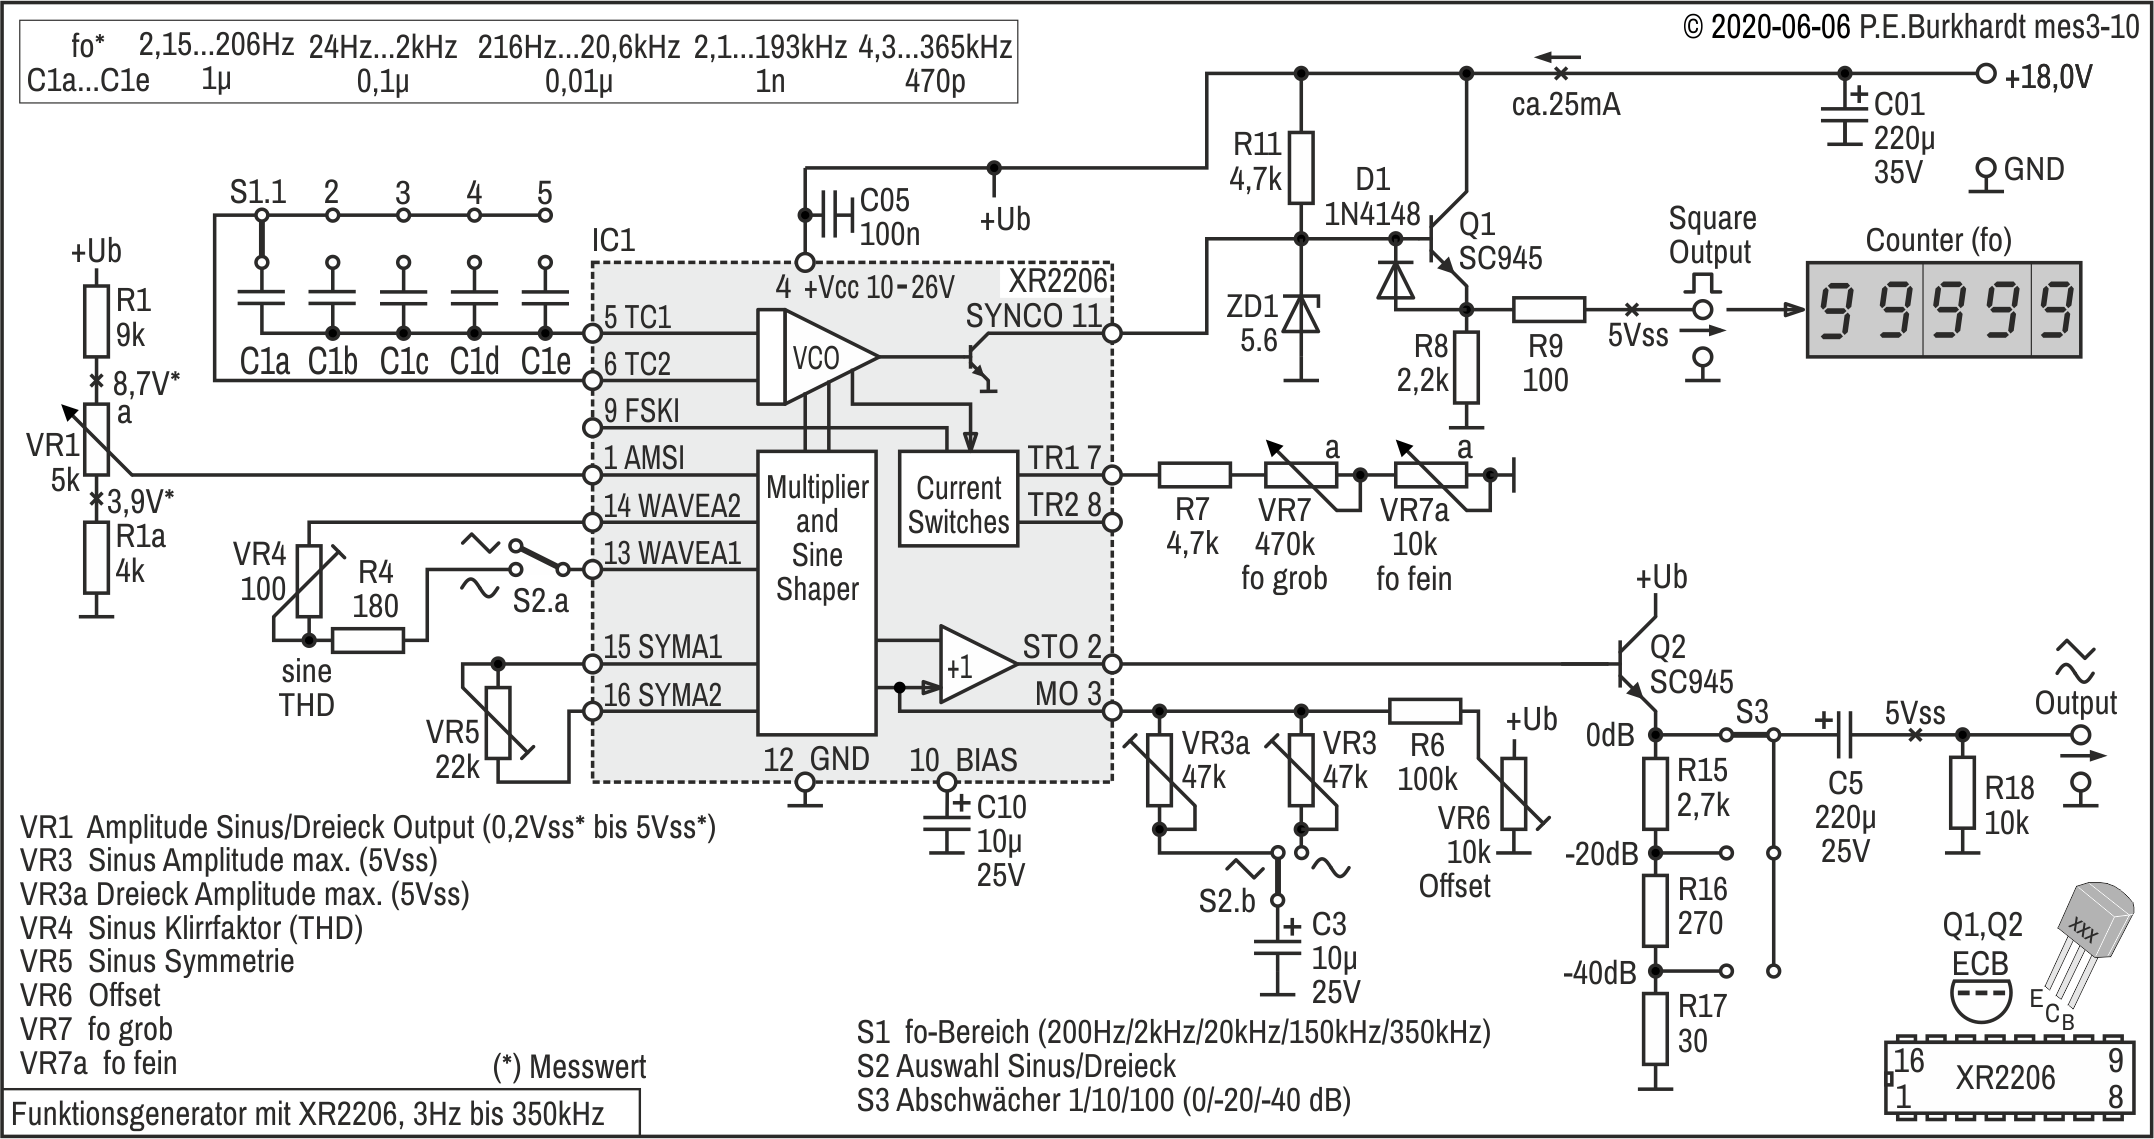 Funktionsgenerator XR2206, 3 Hz bis 350 kHz